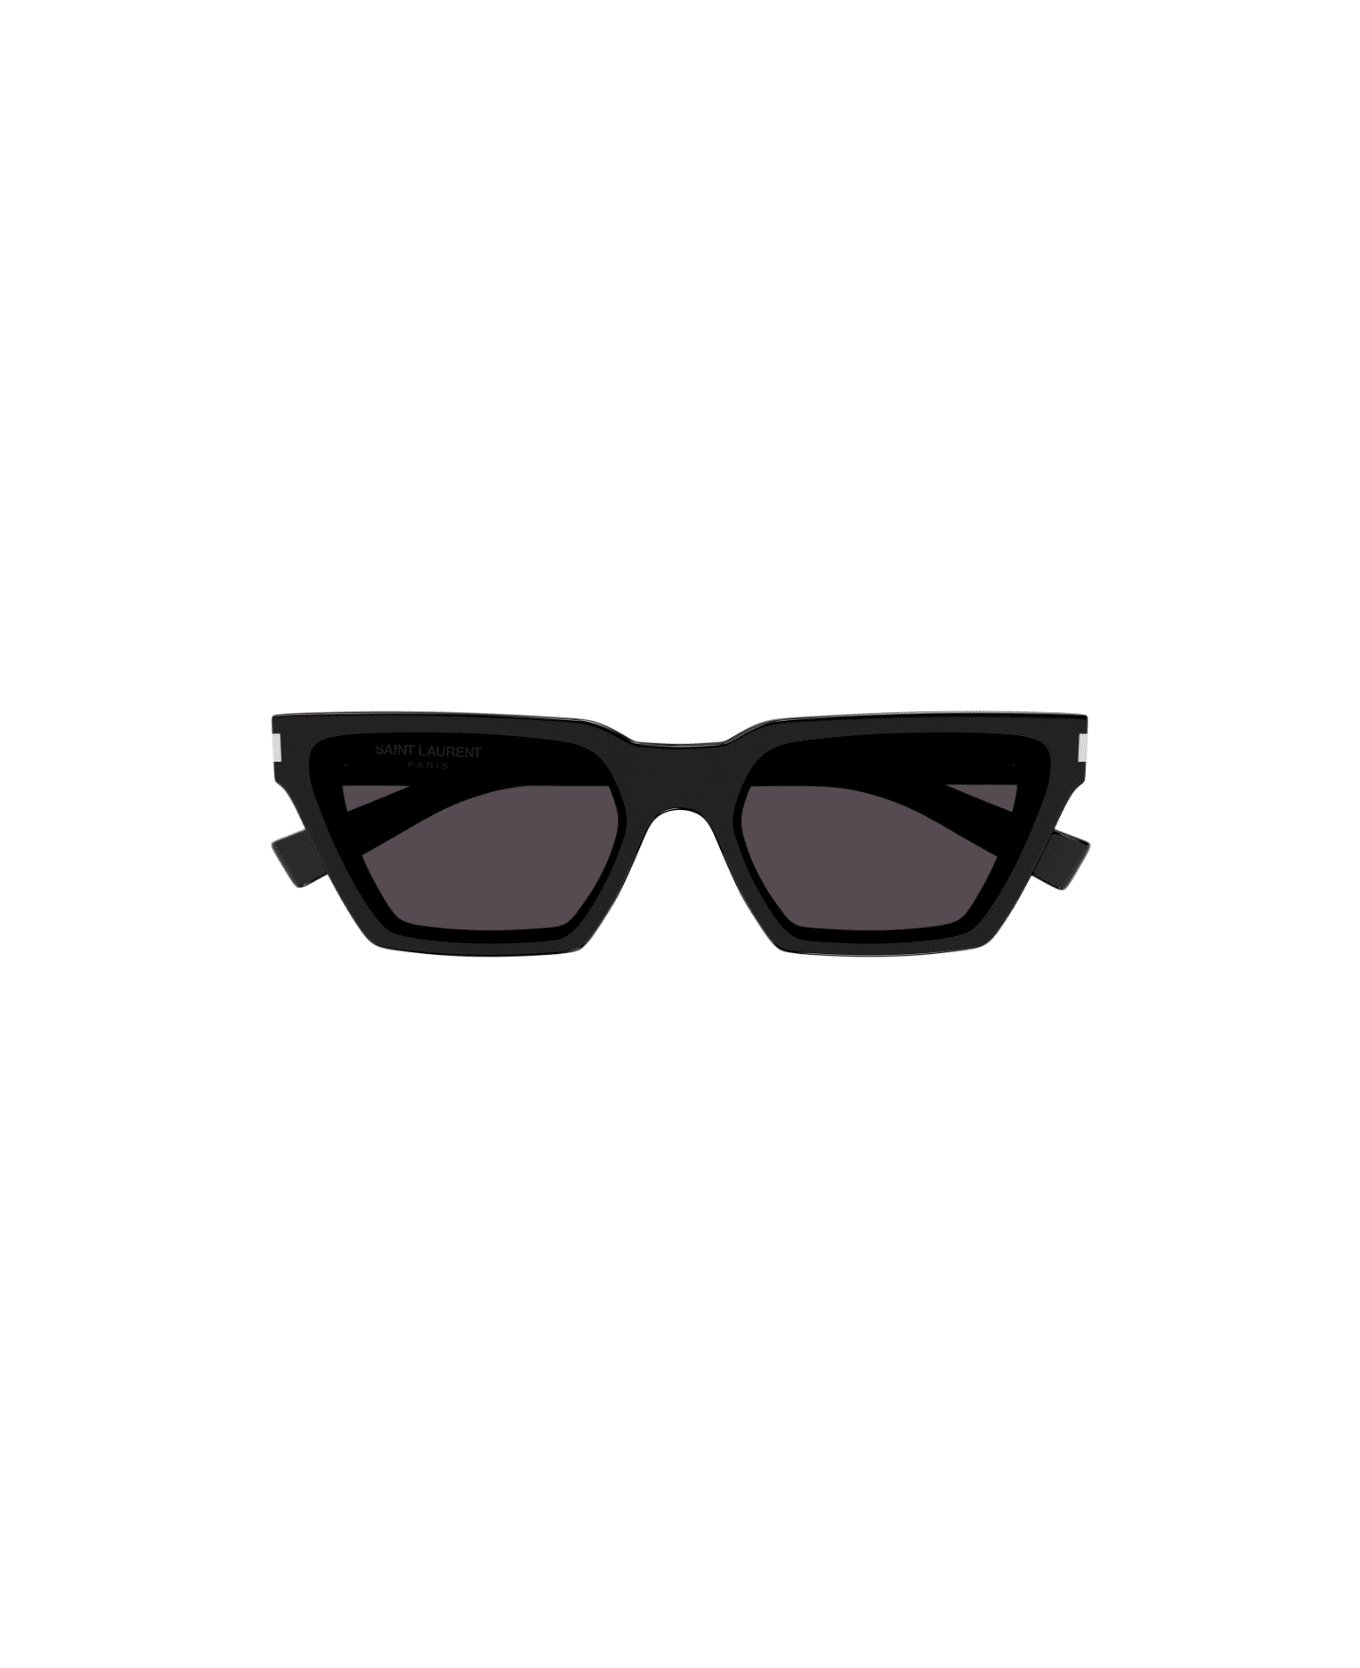 Saint Laurent Eyewear sl 633s 001 Sunglasses サングラス